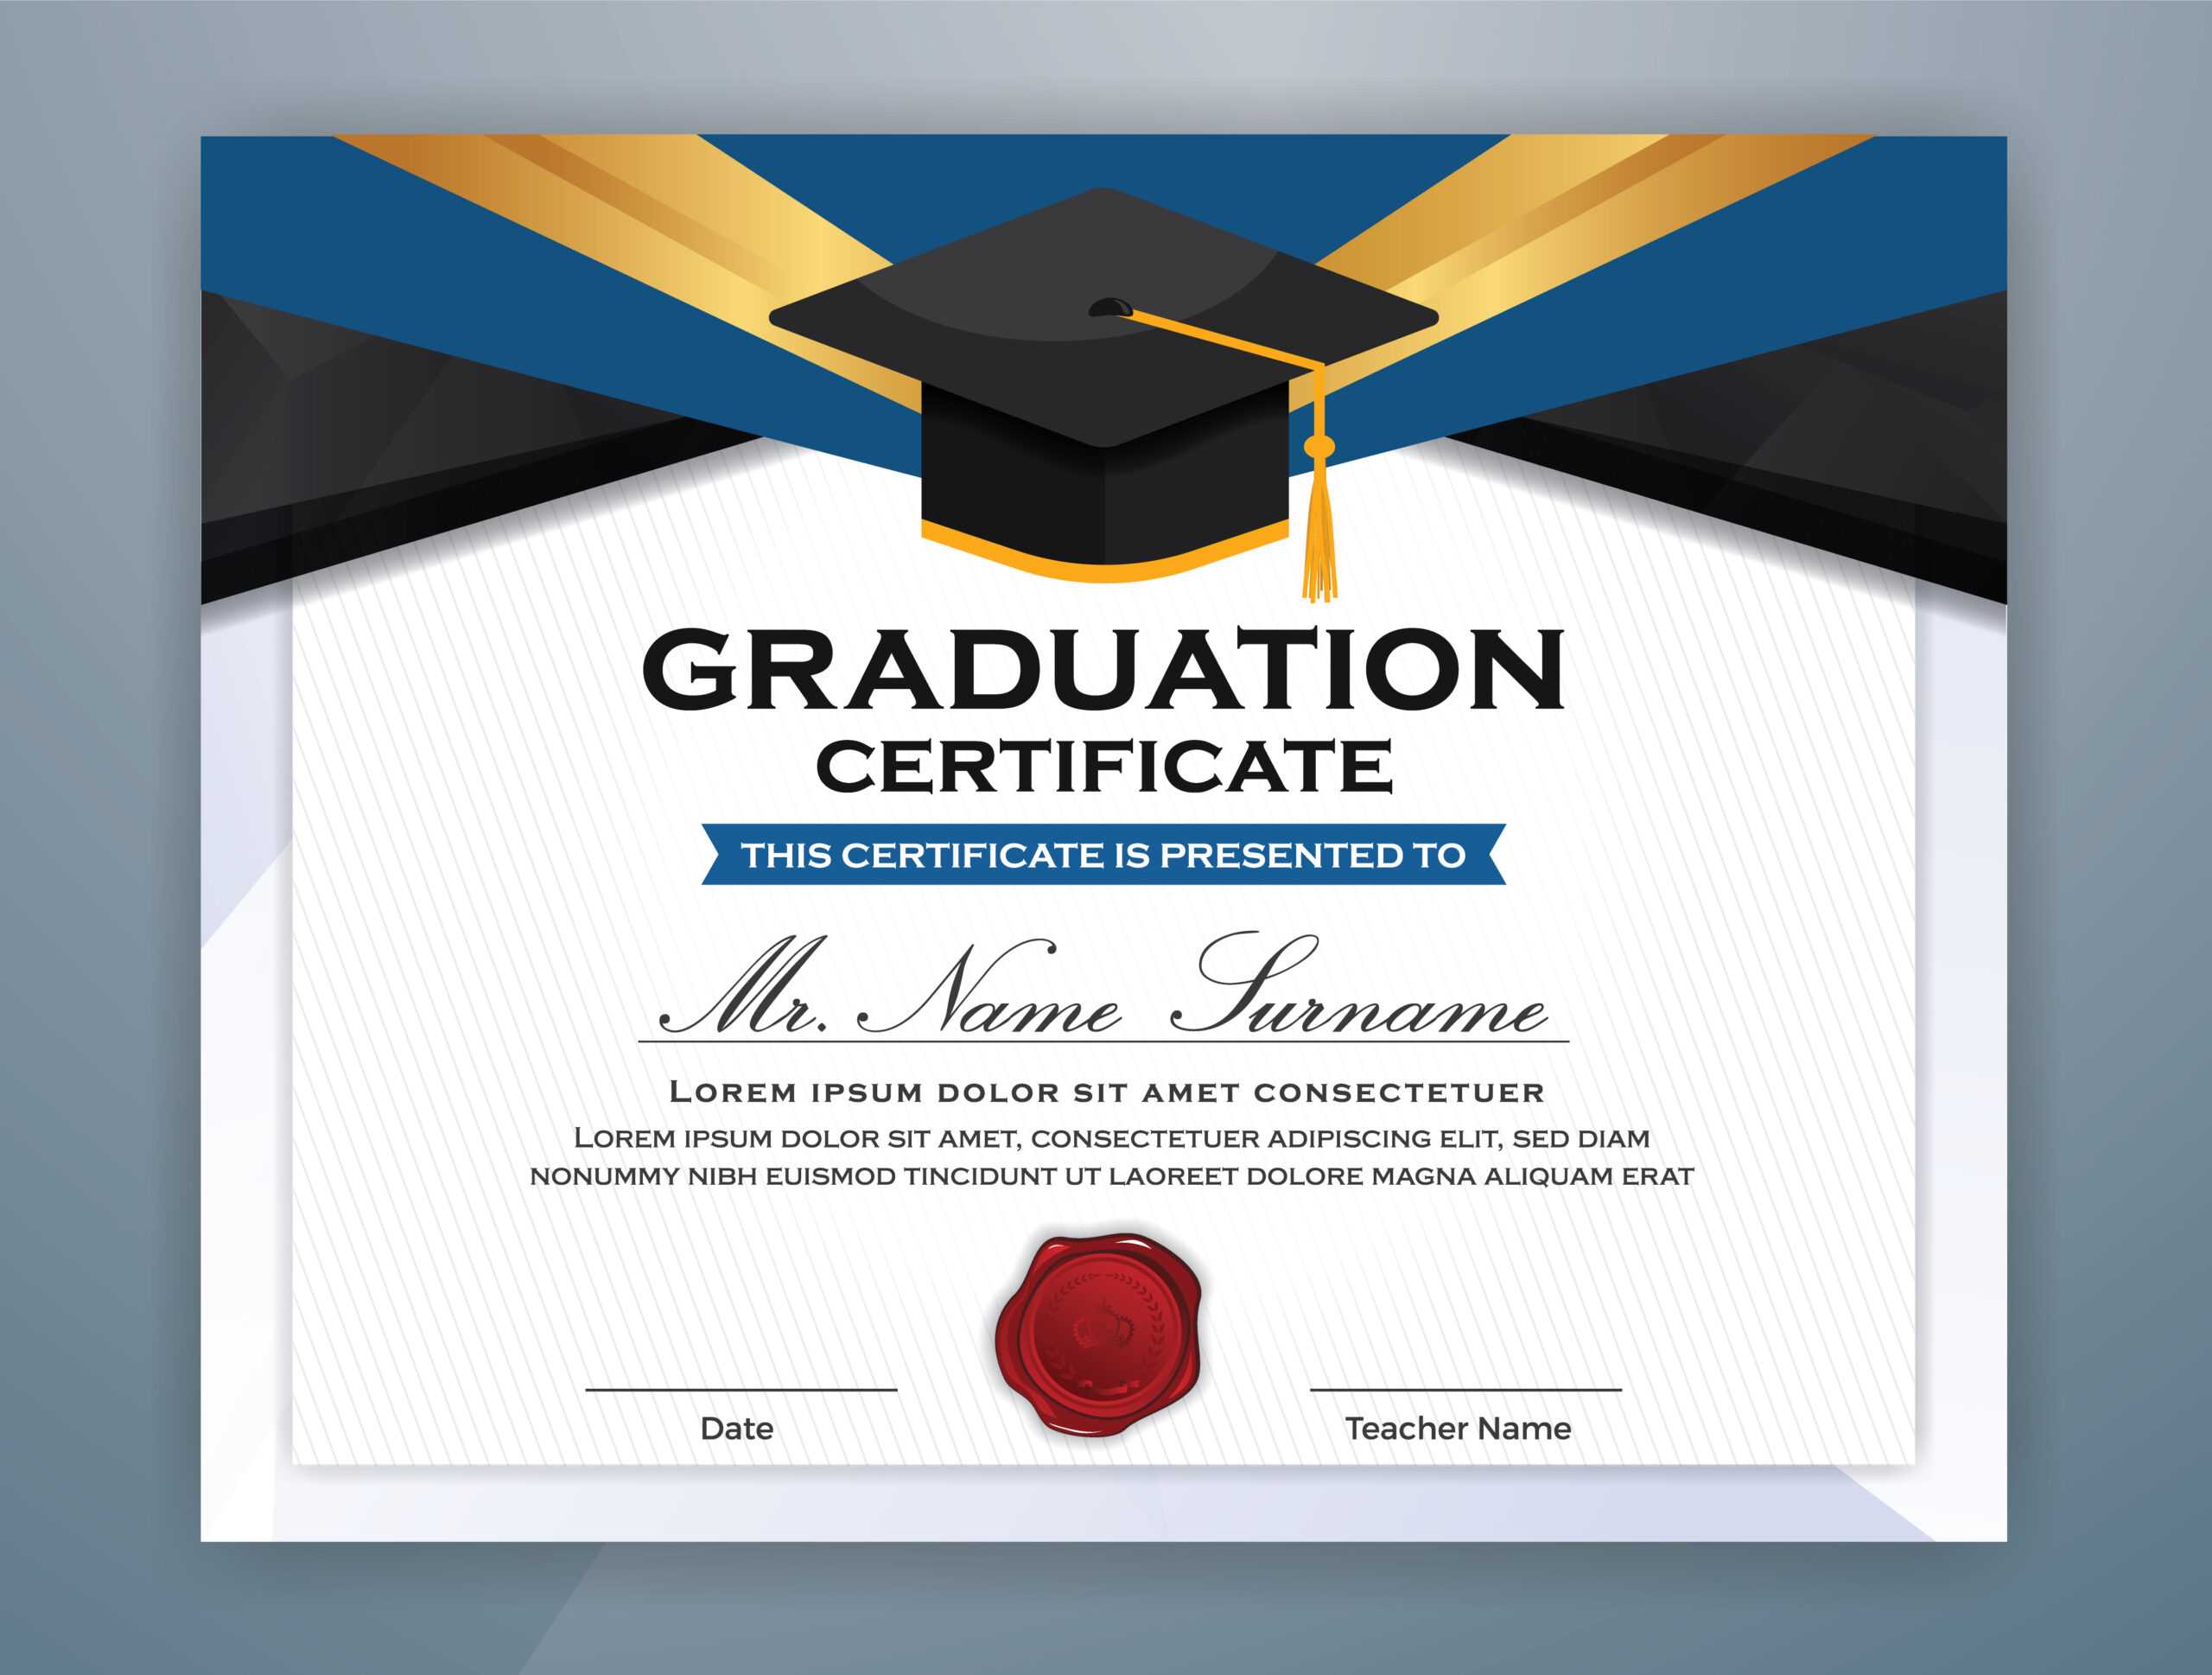 Graduation Certificate Free Vector Art – (4,527 Free Downloads) Throughout College Graduation Certificate Template